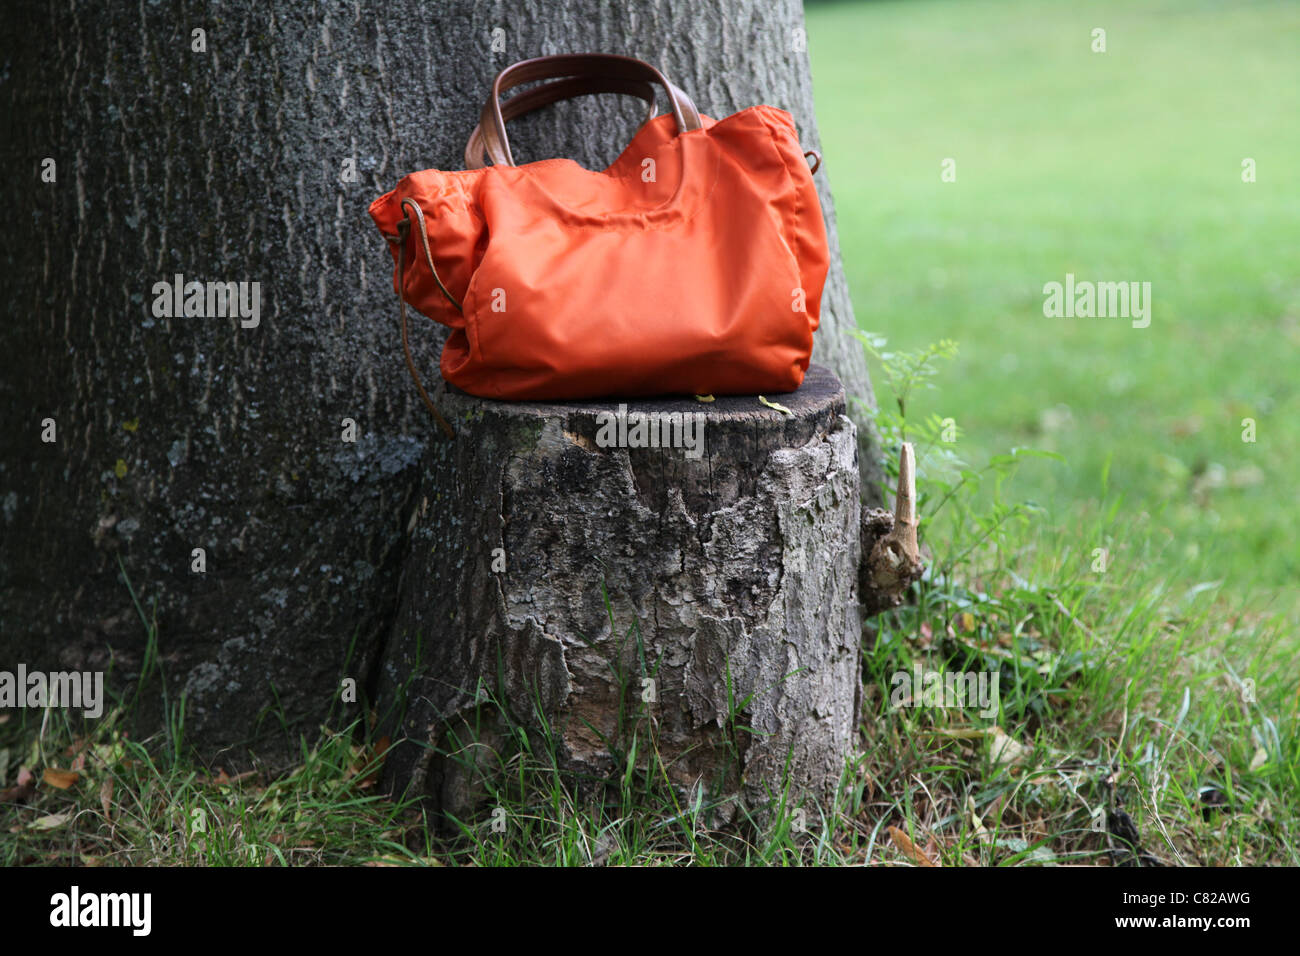 Handtasche in orange, orange bag Stock Photo